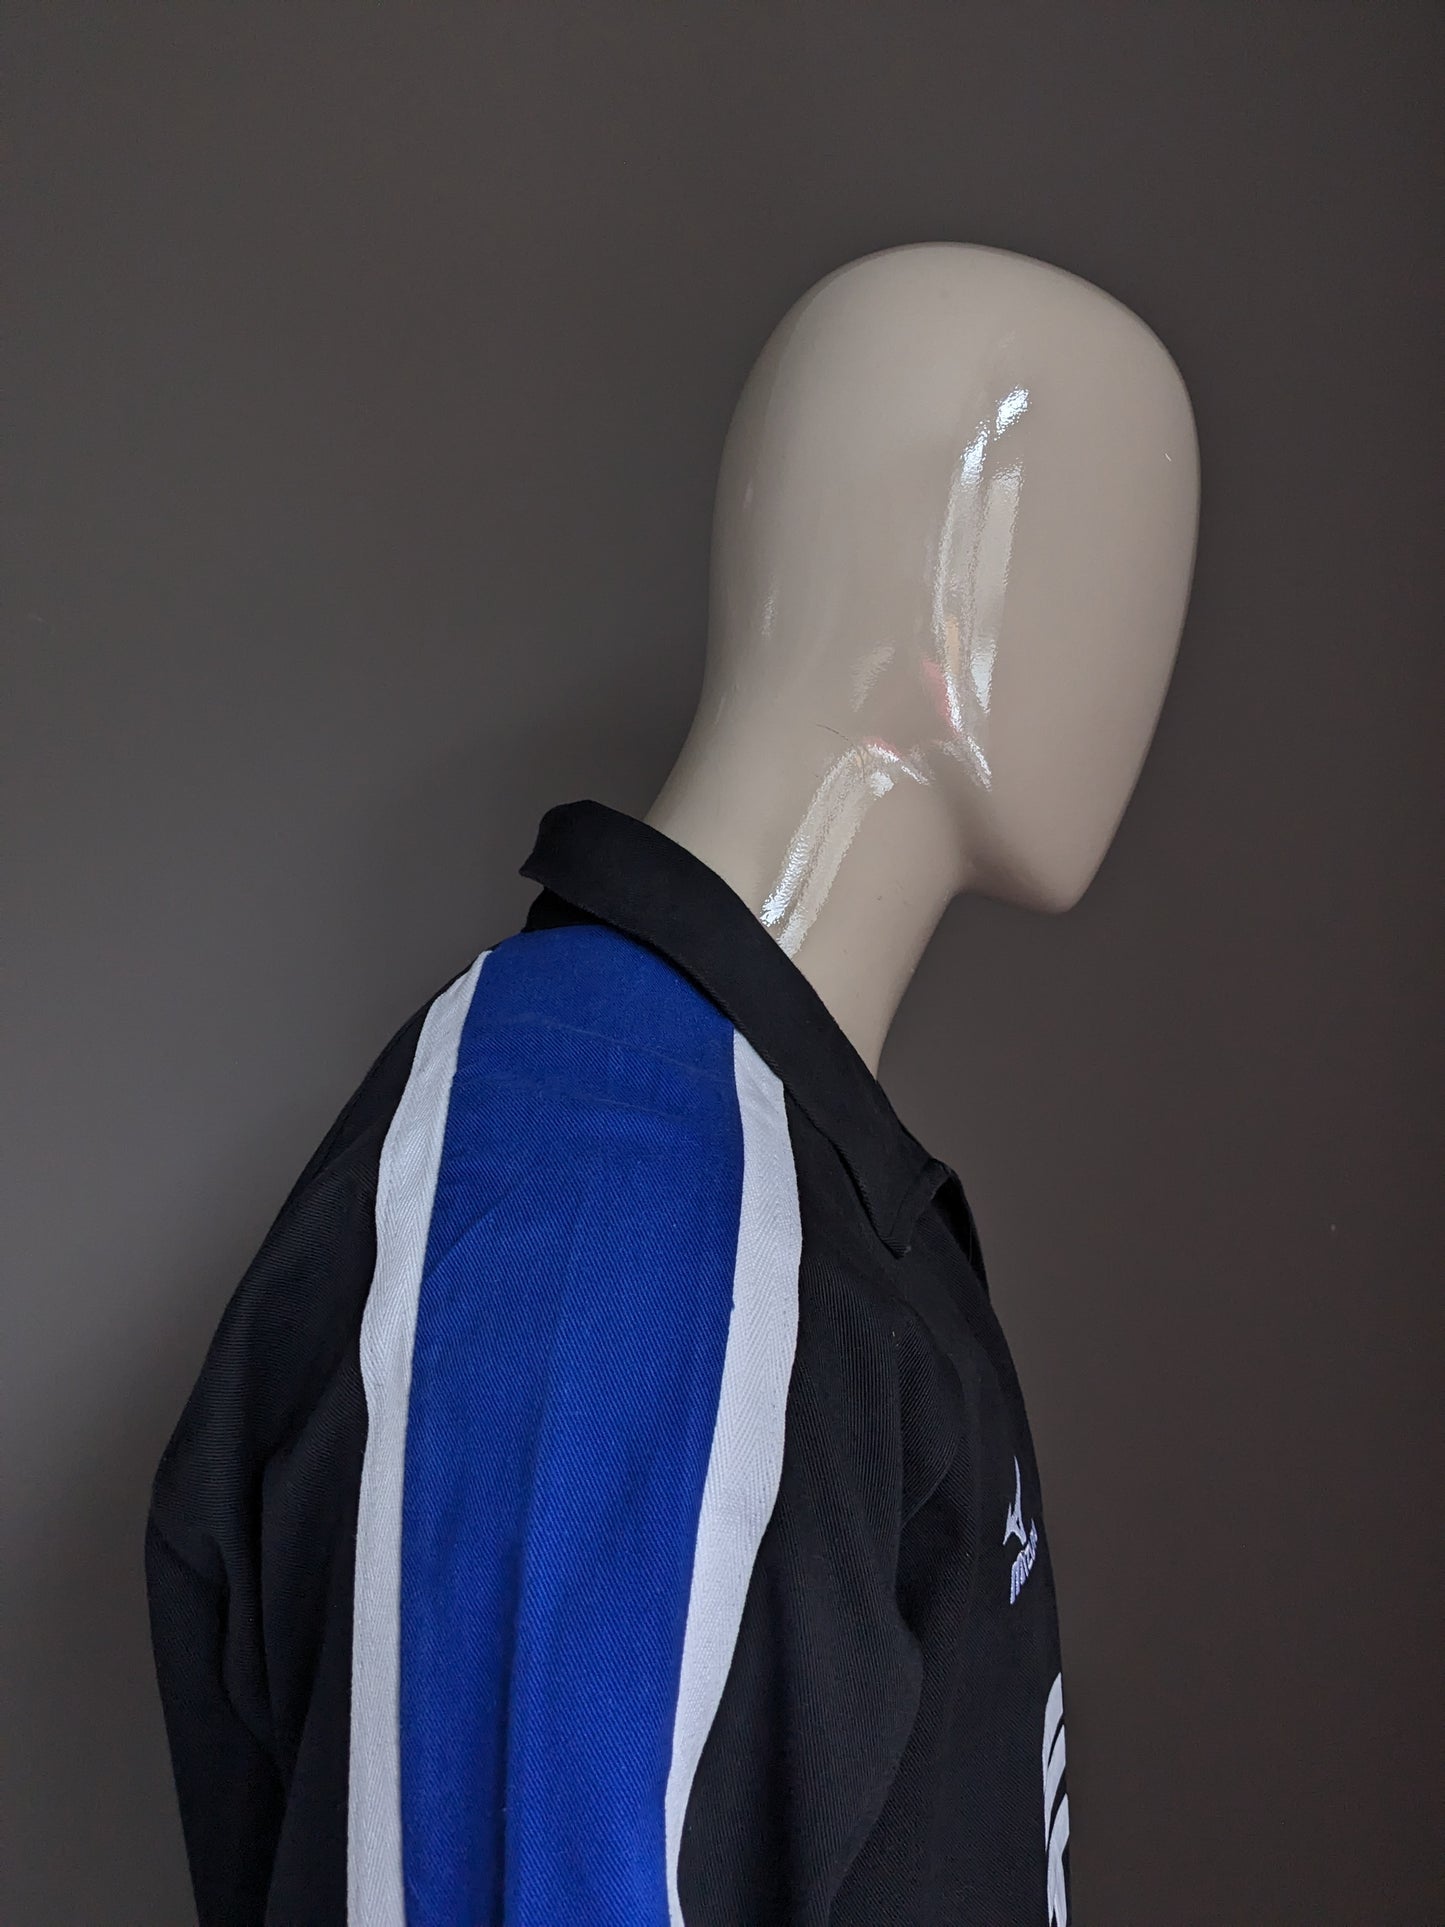 Mizuno Original "Reading Football Club" Polo Sweater. Black white blue colored. Size XL